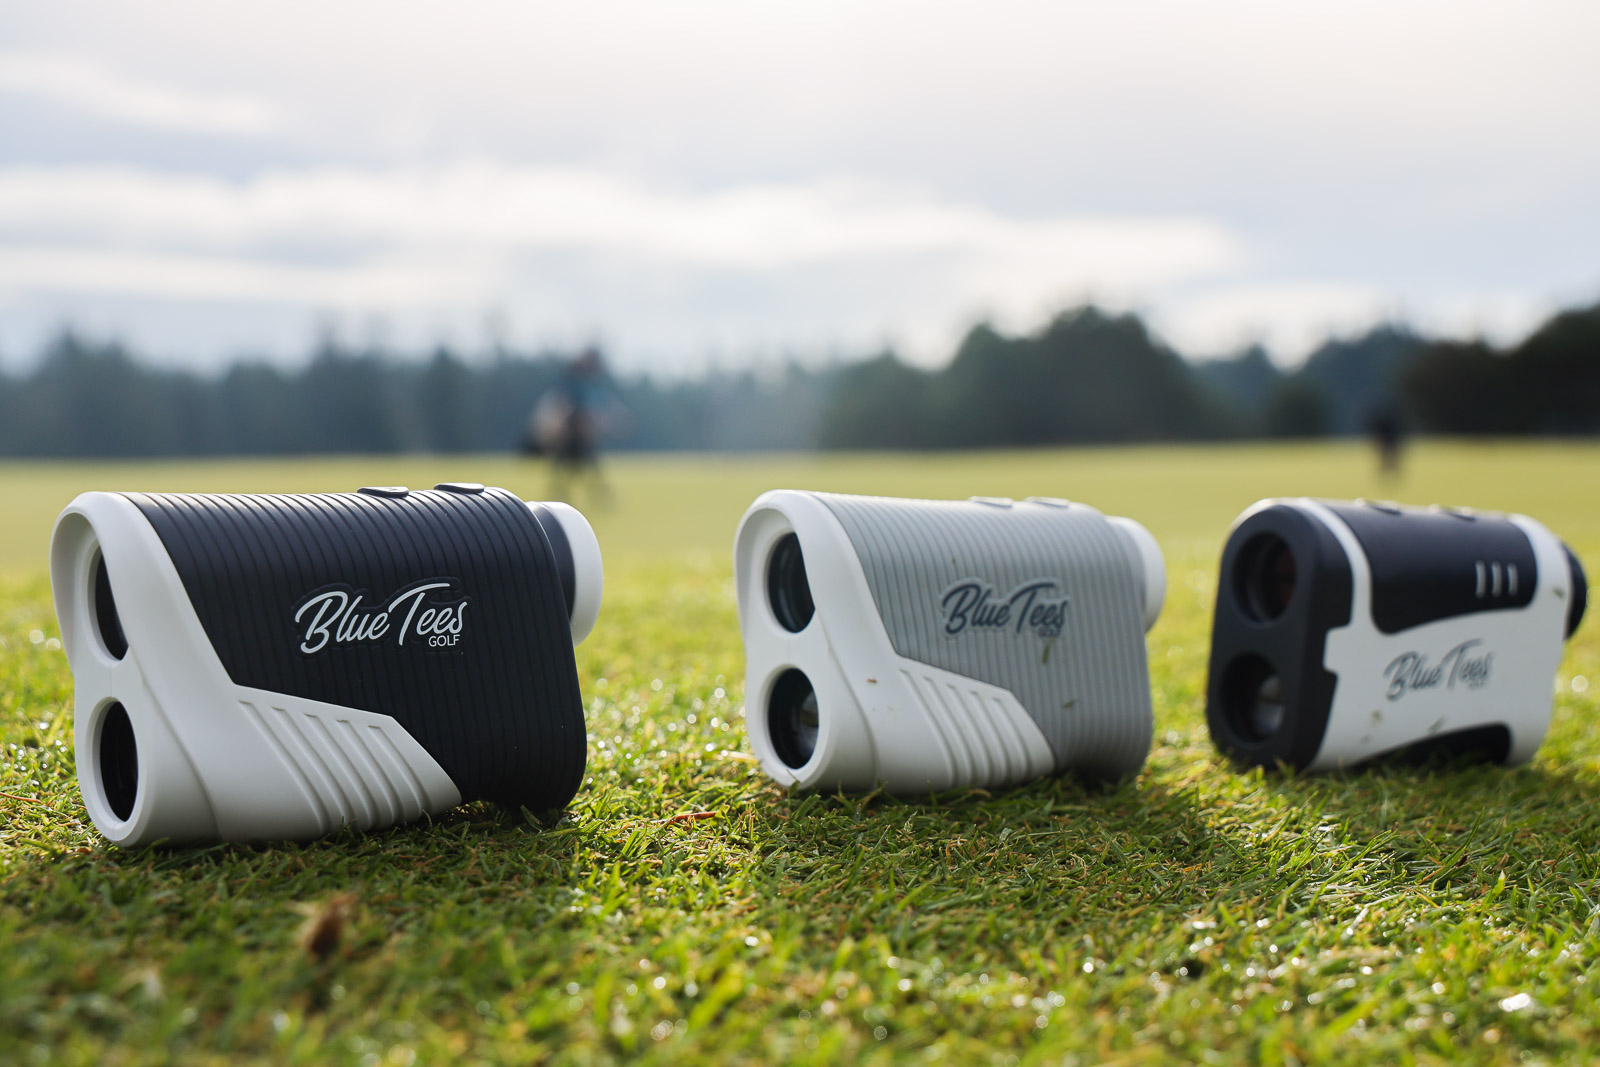 Blue Tees Golf Series 2 Pro Slope Golf Rangefinder - "BreakingEighty10" for 10% off!